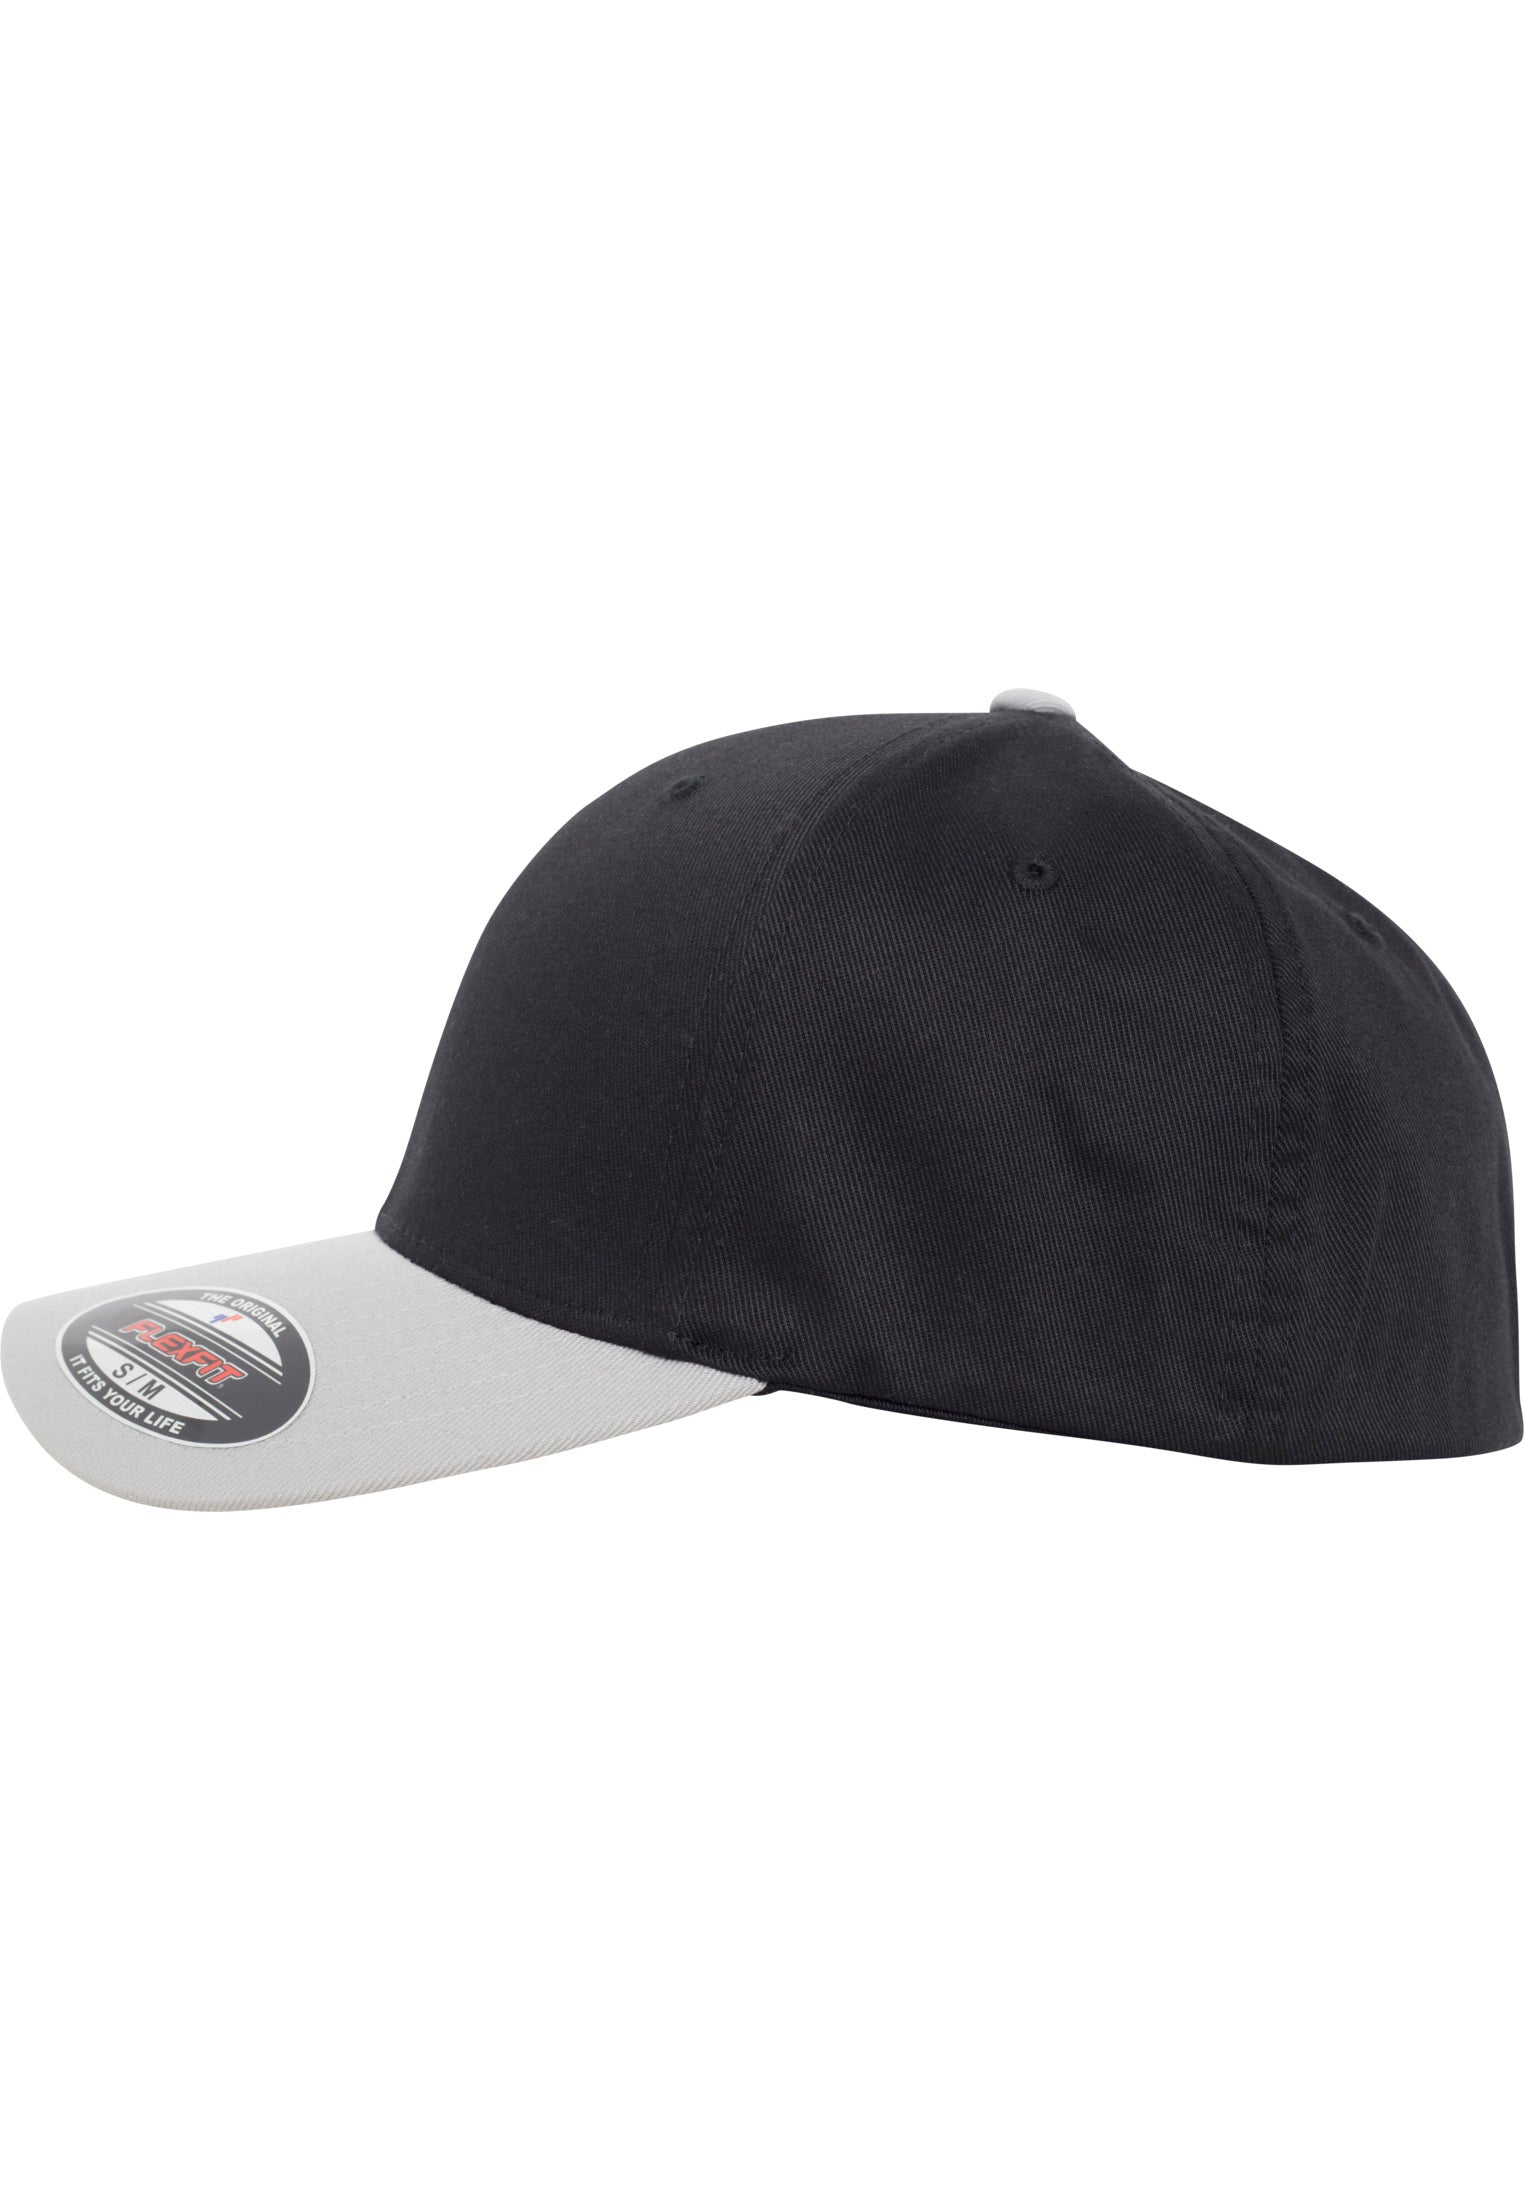 Flexfit Cap Two Tone - Black/Silver - Headz Up 